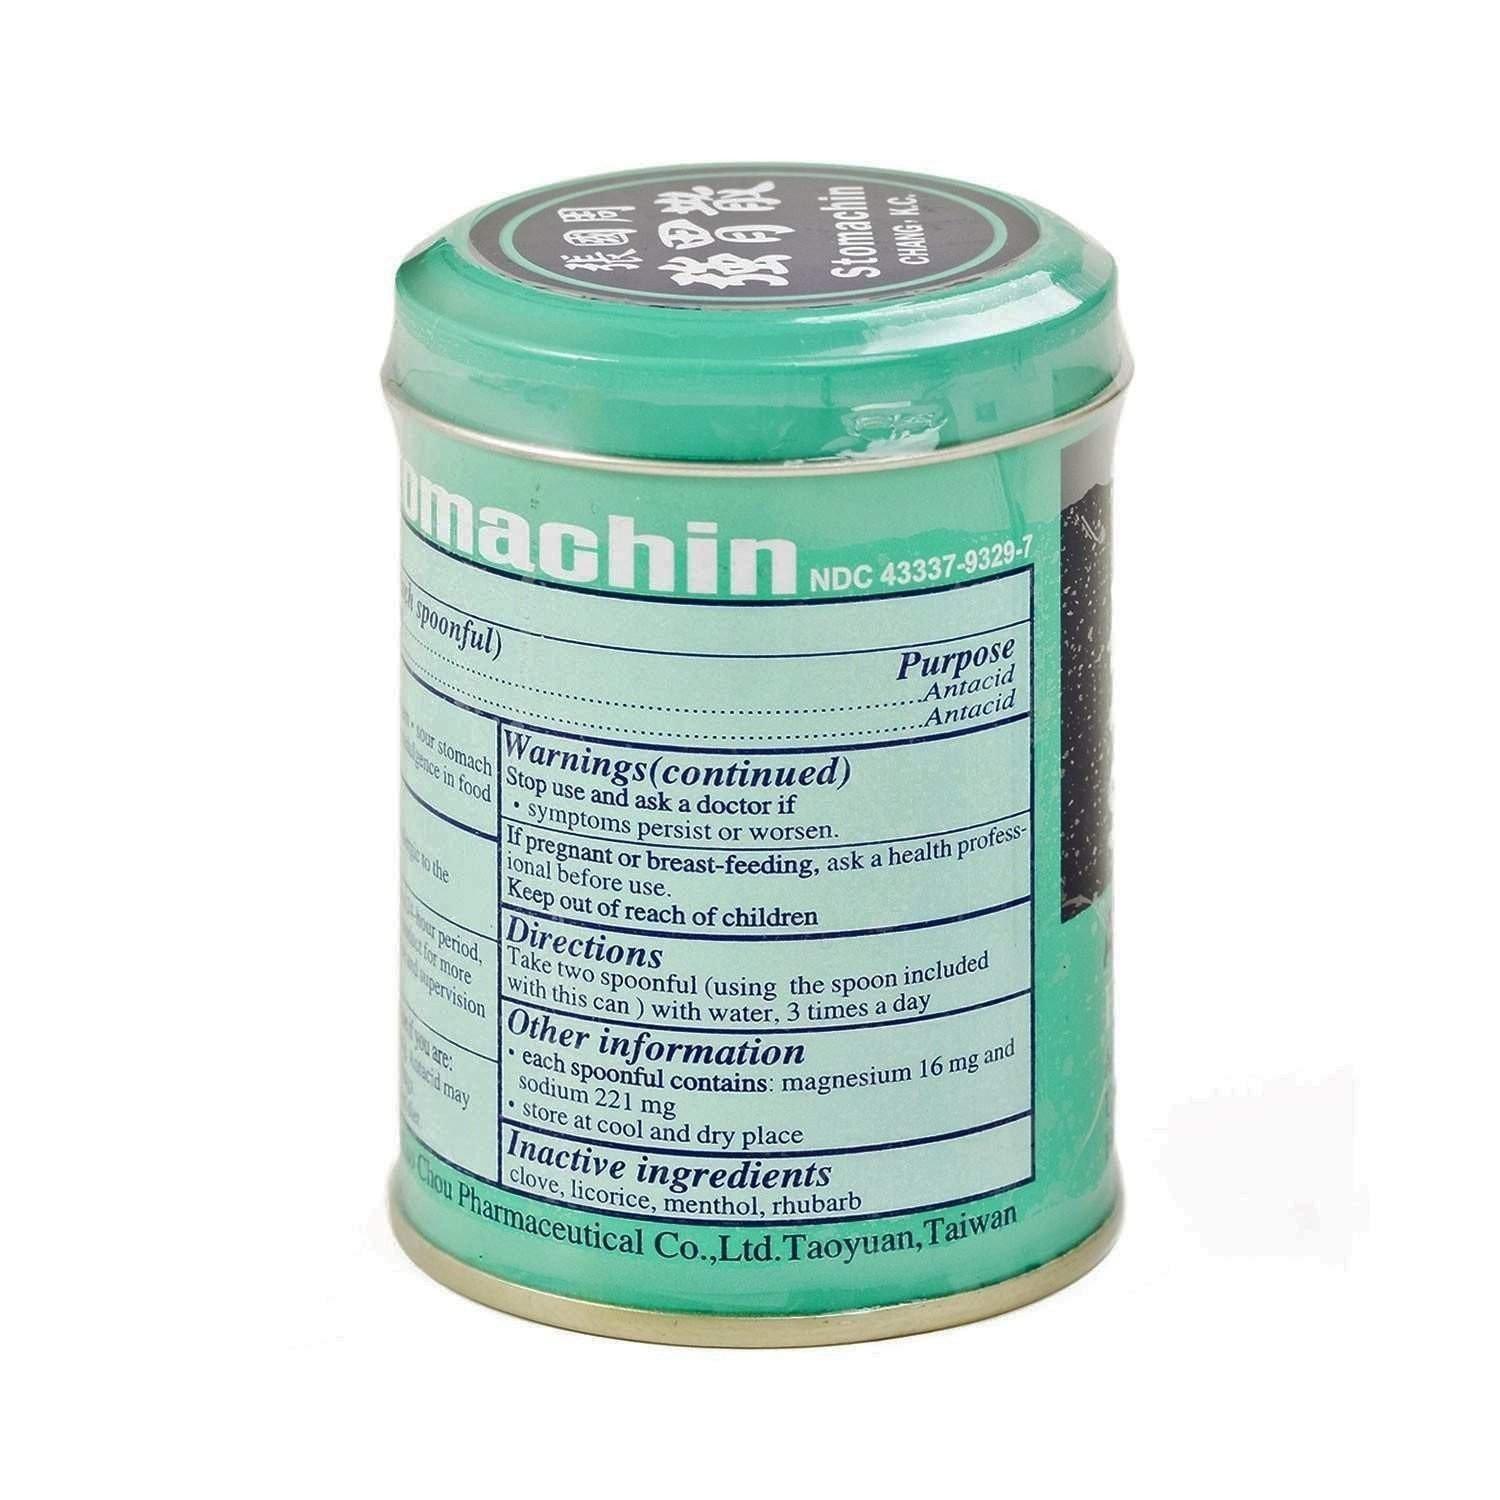 Stomachin Antacid Powder - Small Can (3.3oz) - Buy at New Green Nutrition